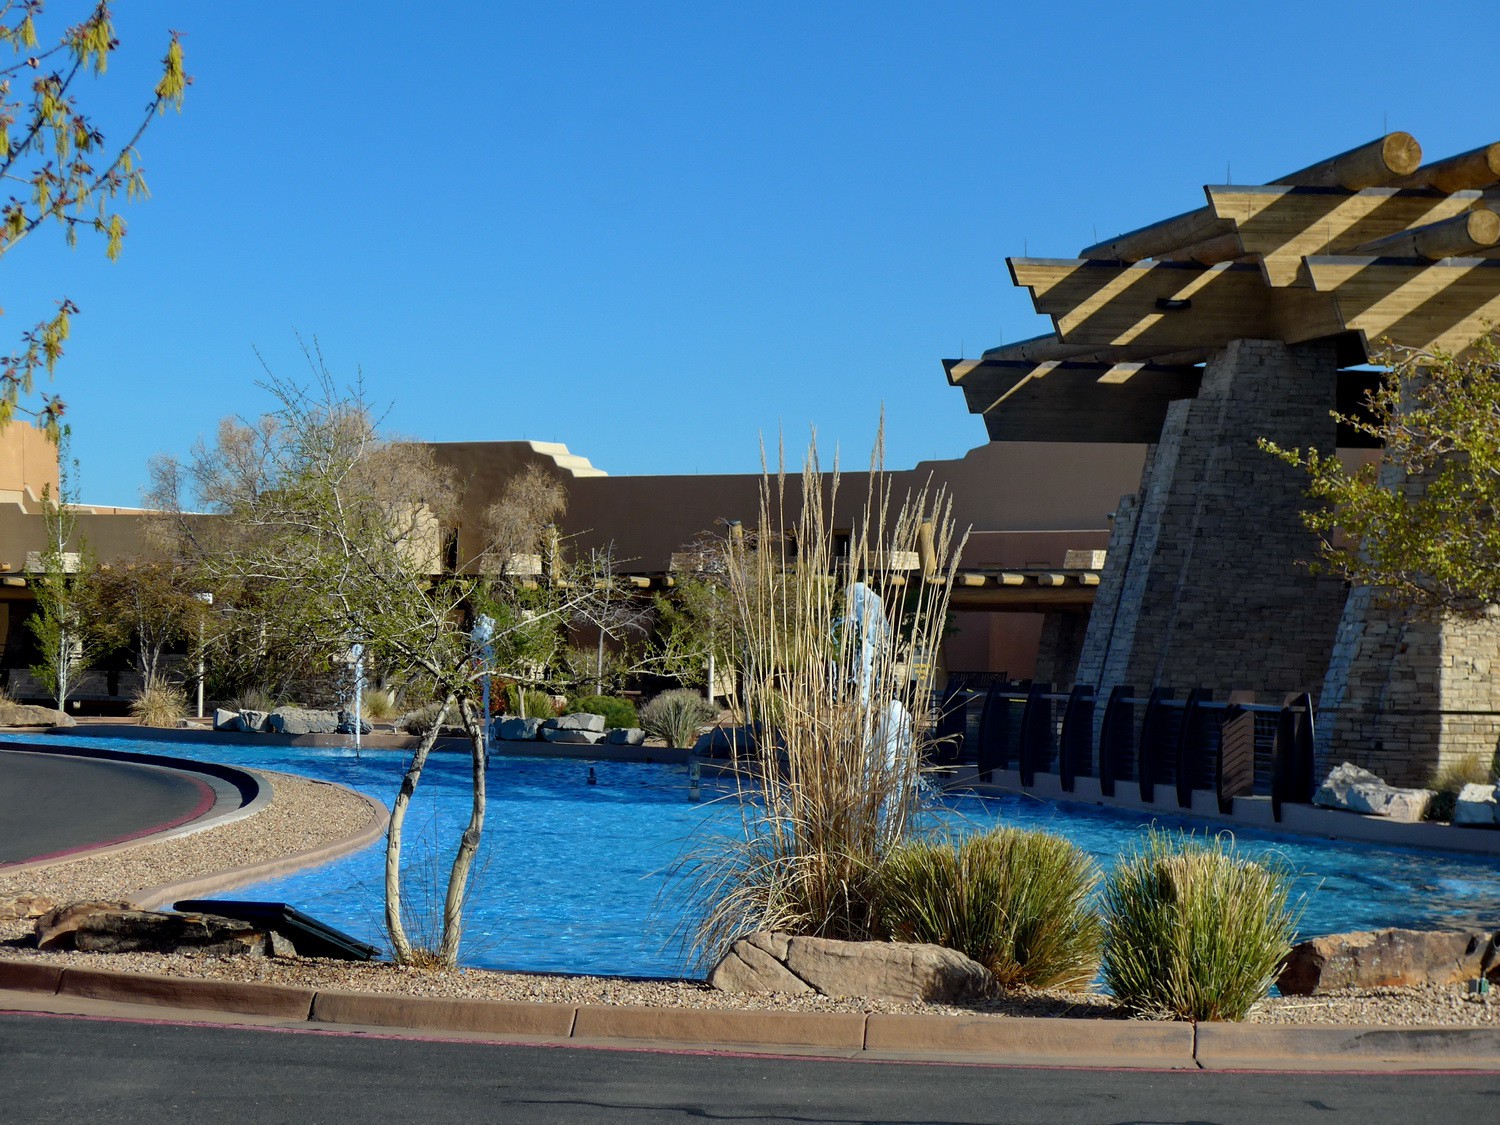 Entrance of the Sandia Casino in Albuquerque